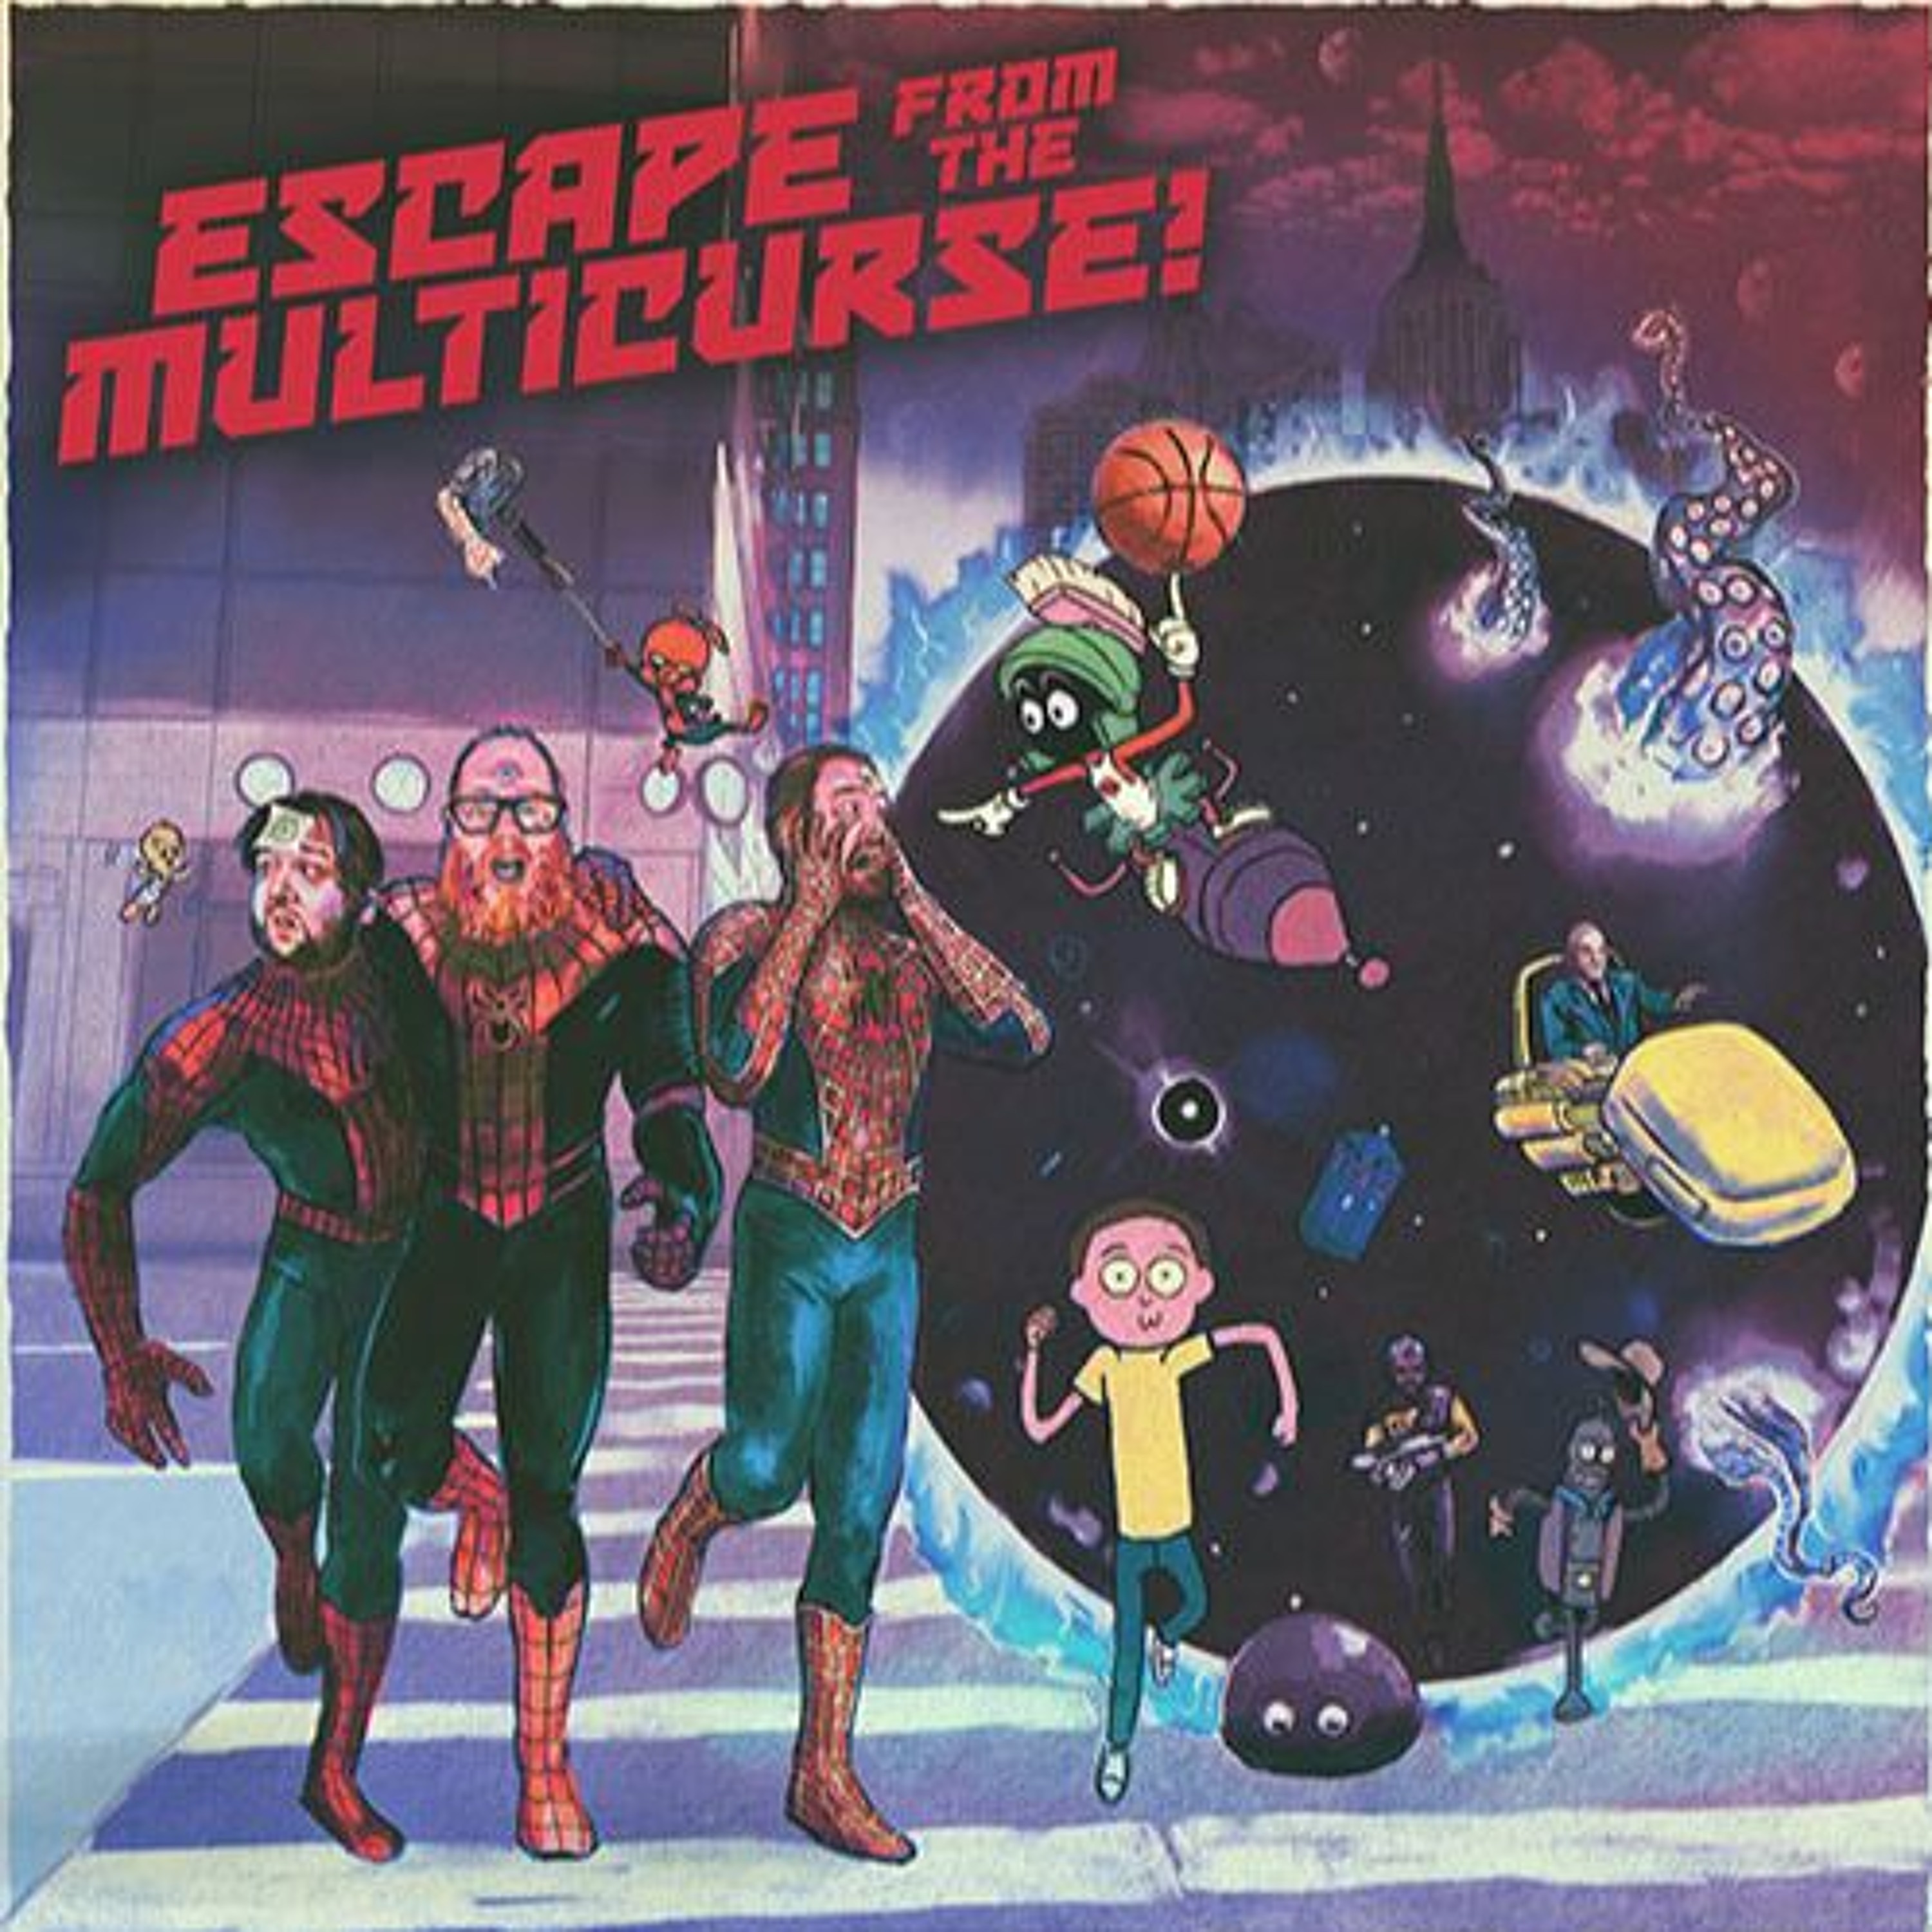 689. Escape from the Multicurse: Edge of Tomorrow